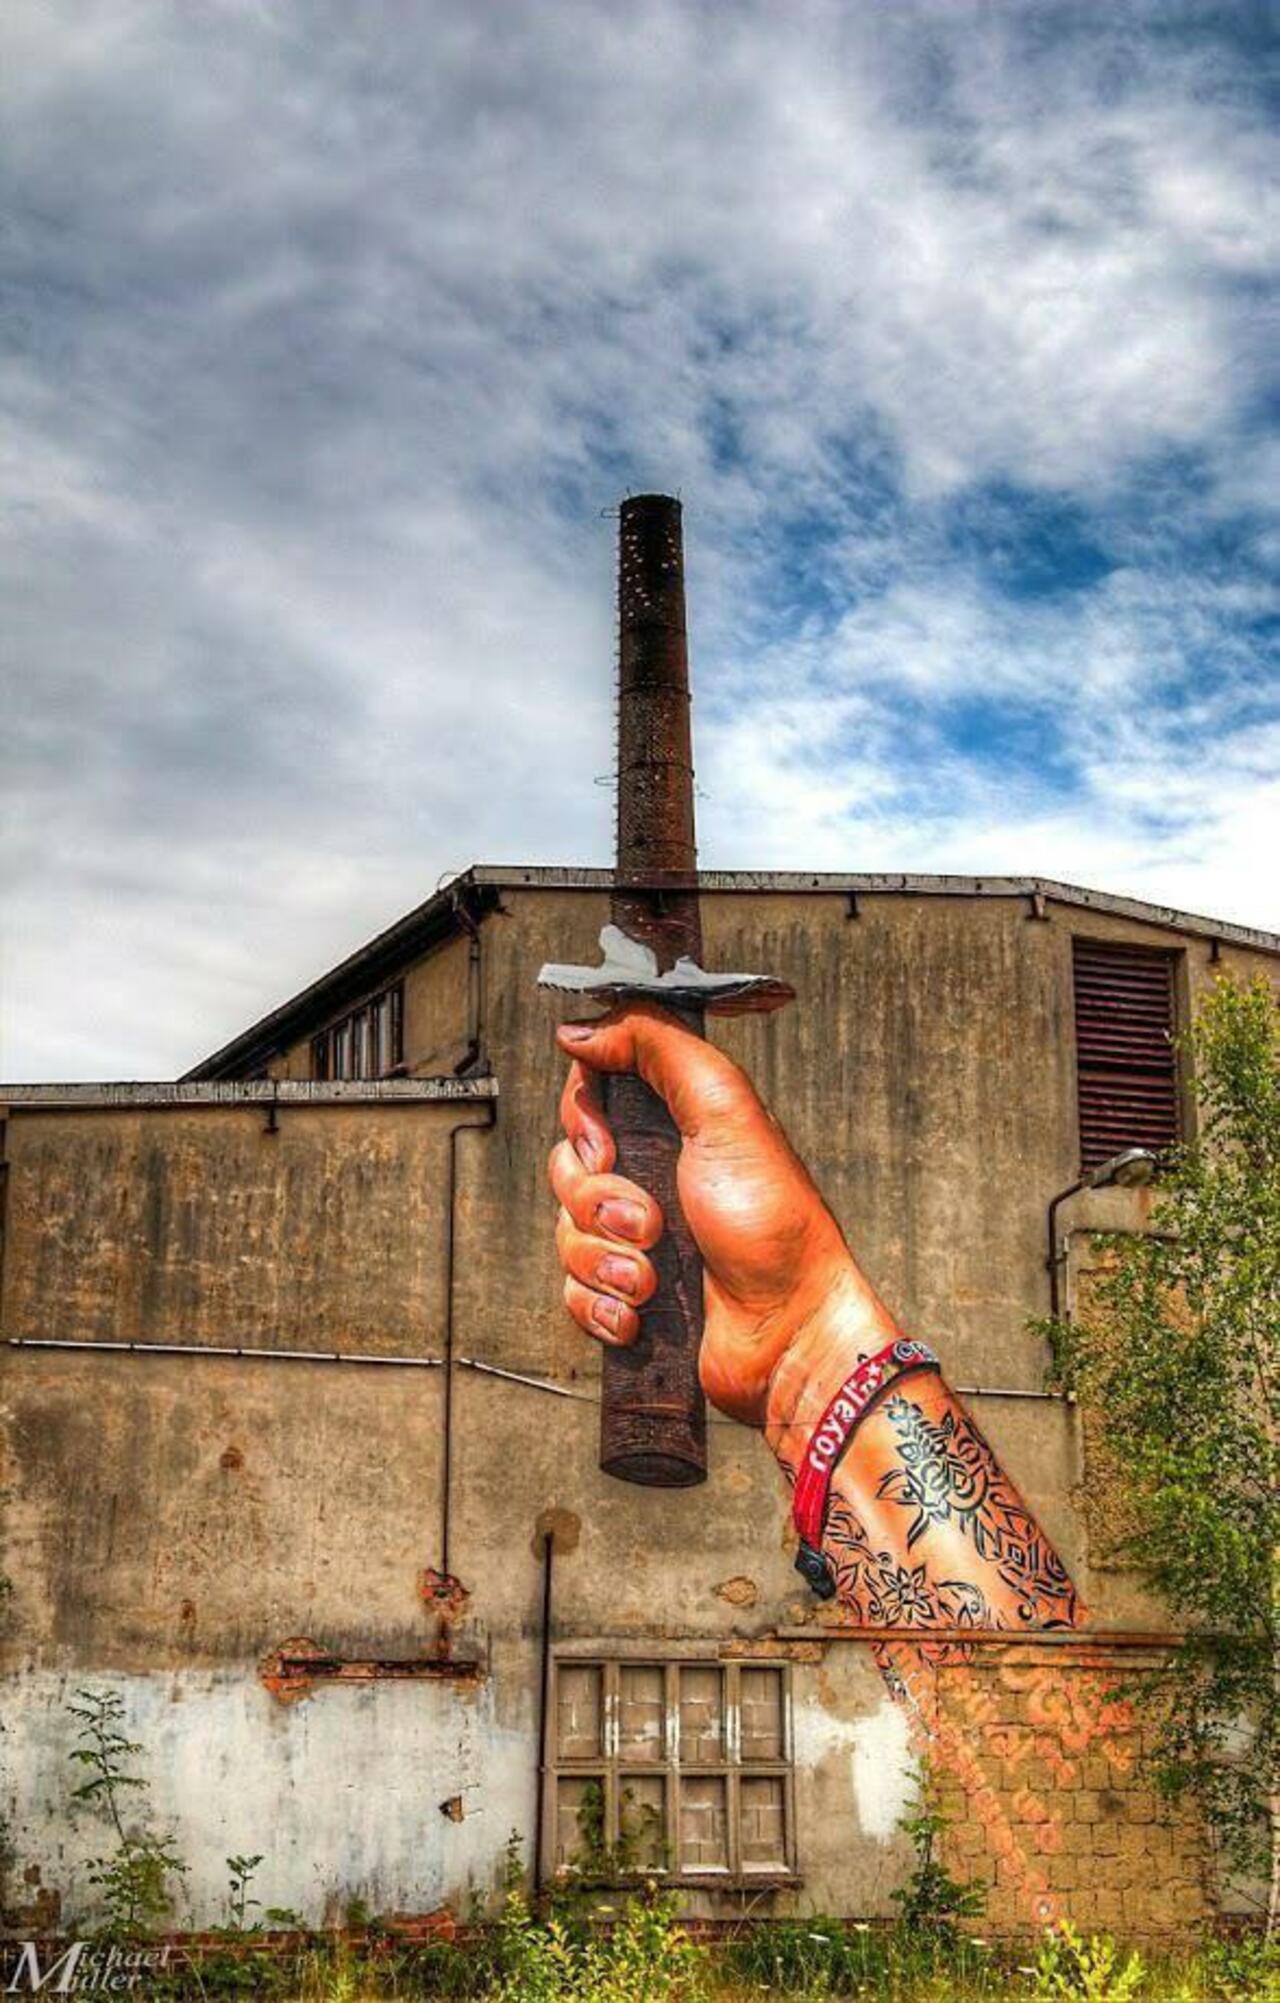 RT @AuKeats: #switch a factory chimney into #streetart #bedifferent #graffiti #arte #art http://t.co/F9lT47mq0h